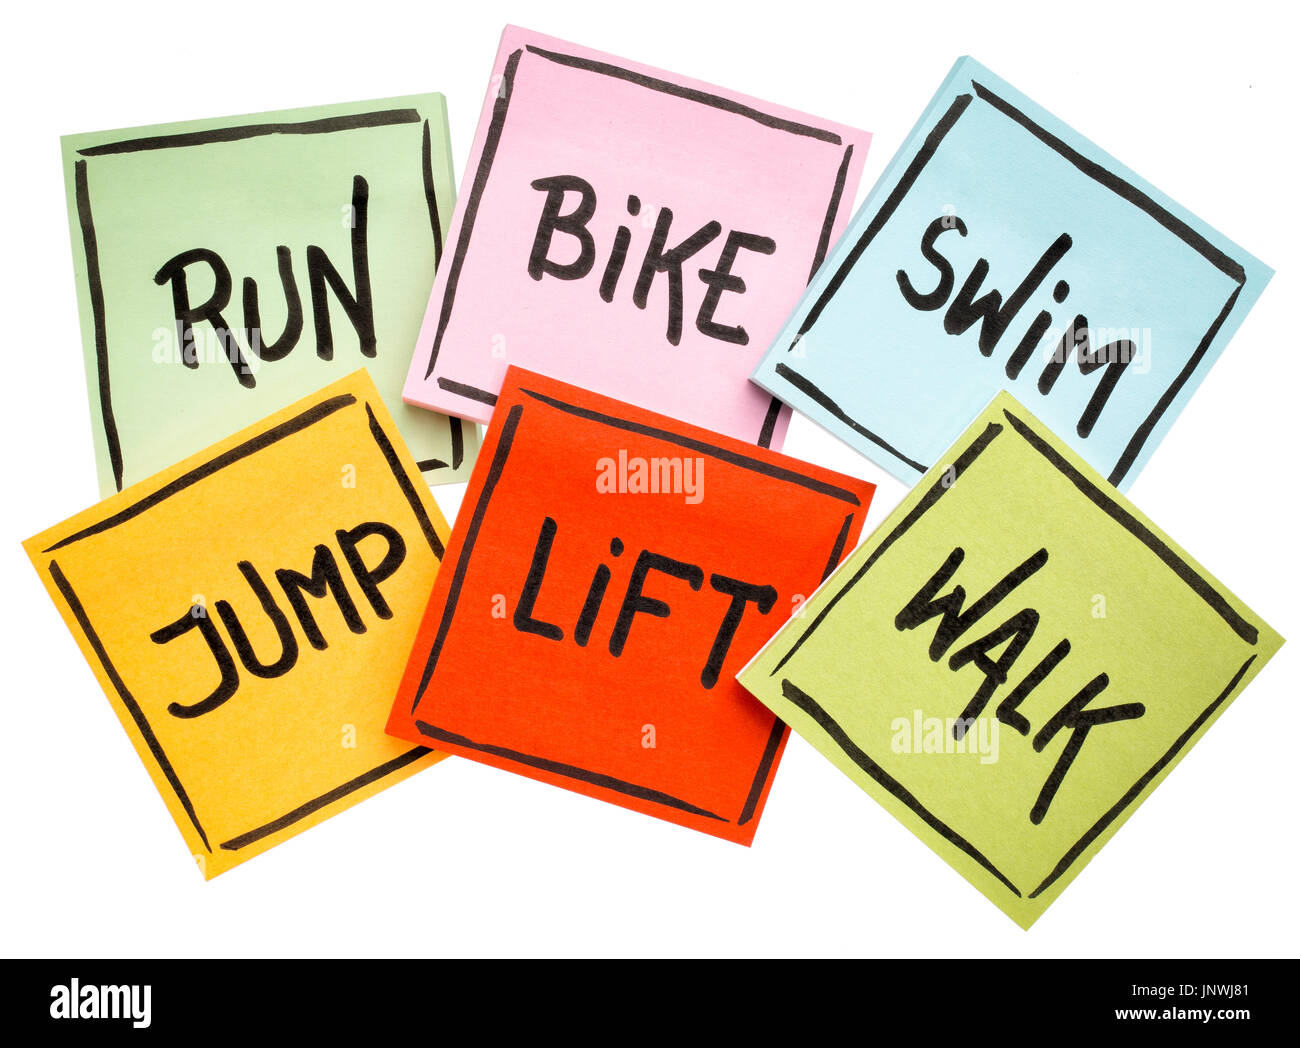 run, bike, swim, jump, lift, walk  - fitness or cross training concept - handwriting on sticky notes isolated on white Stock Photo